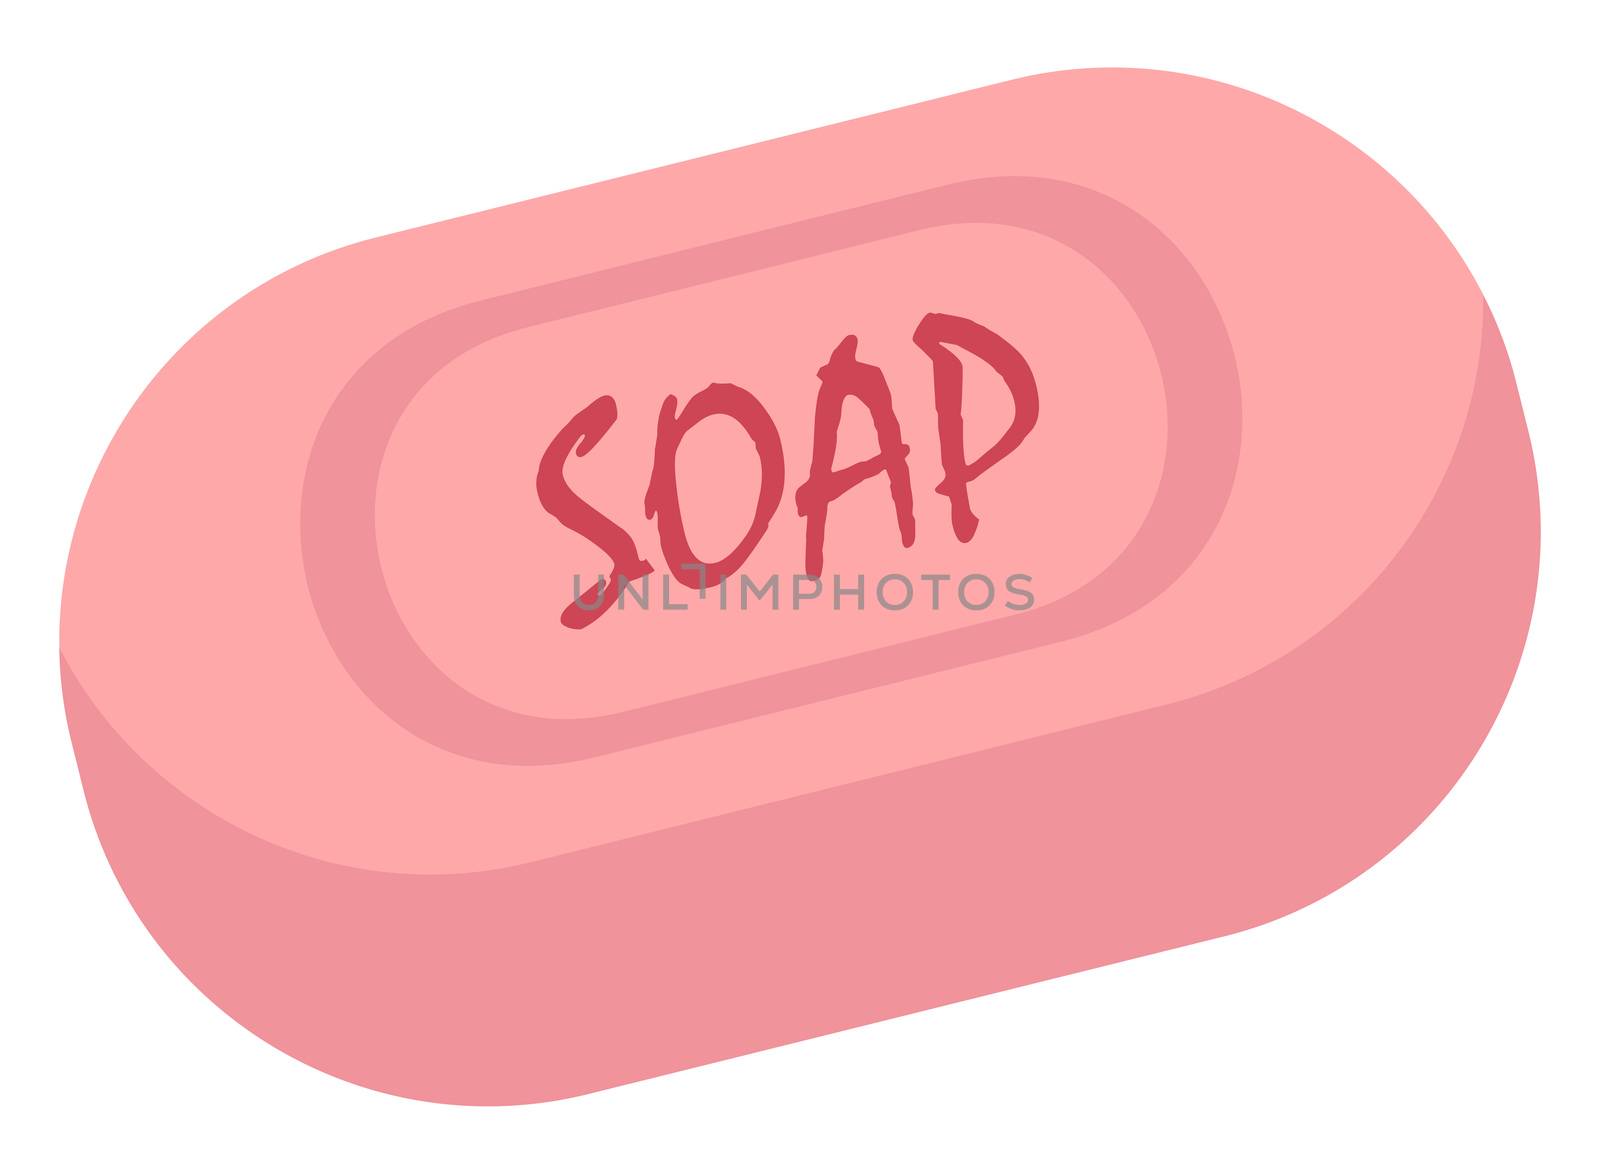 Hand  soap, illustration, vector on white background